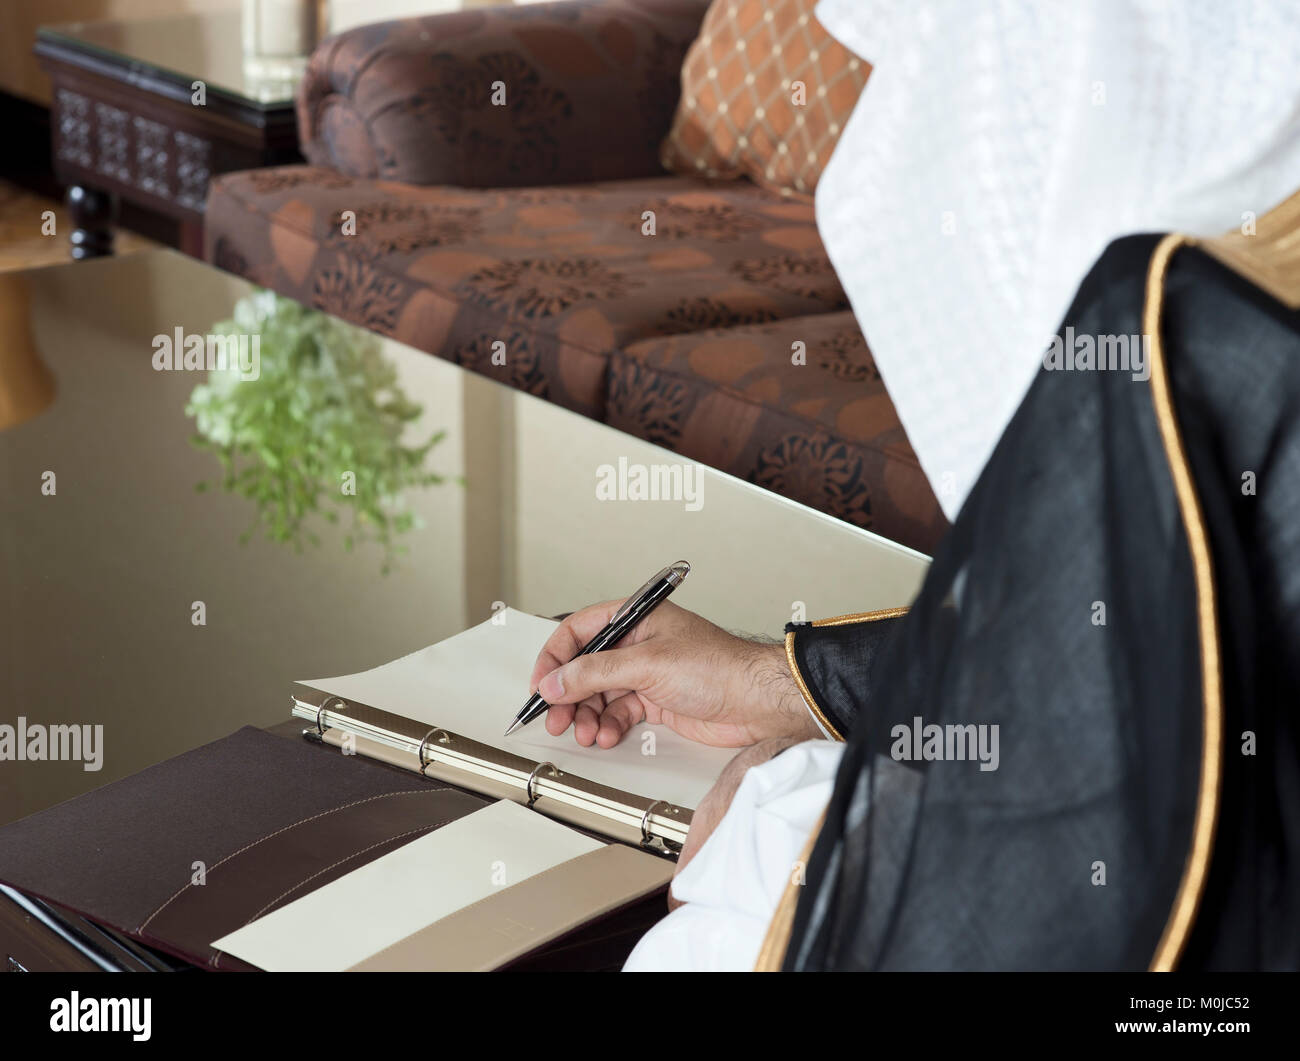 Saudi Arabian Man Hand Writing on A Notebook in a Luxury Home Environment, wearing Saudi Thob, Ghutra and Black Bisht Stock Photo